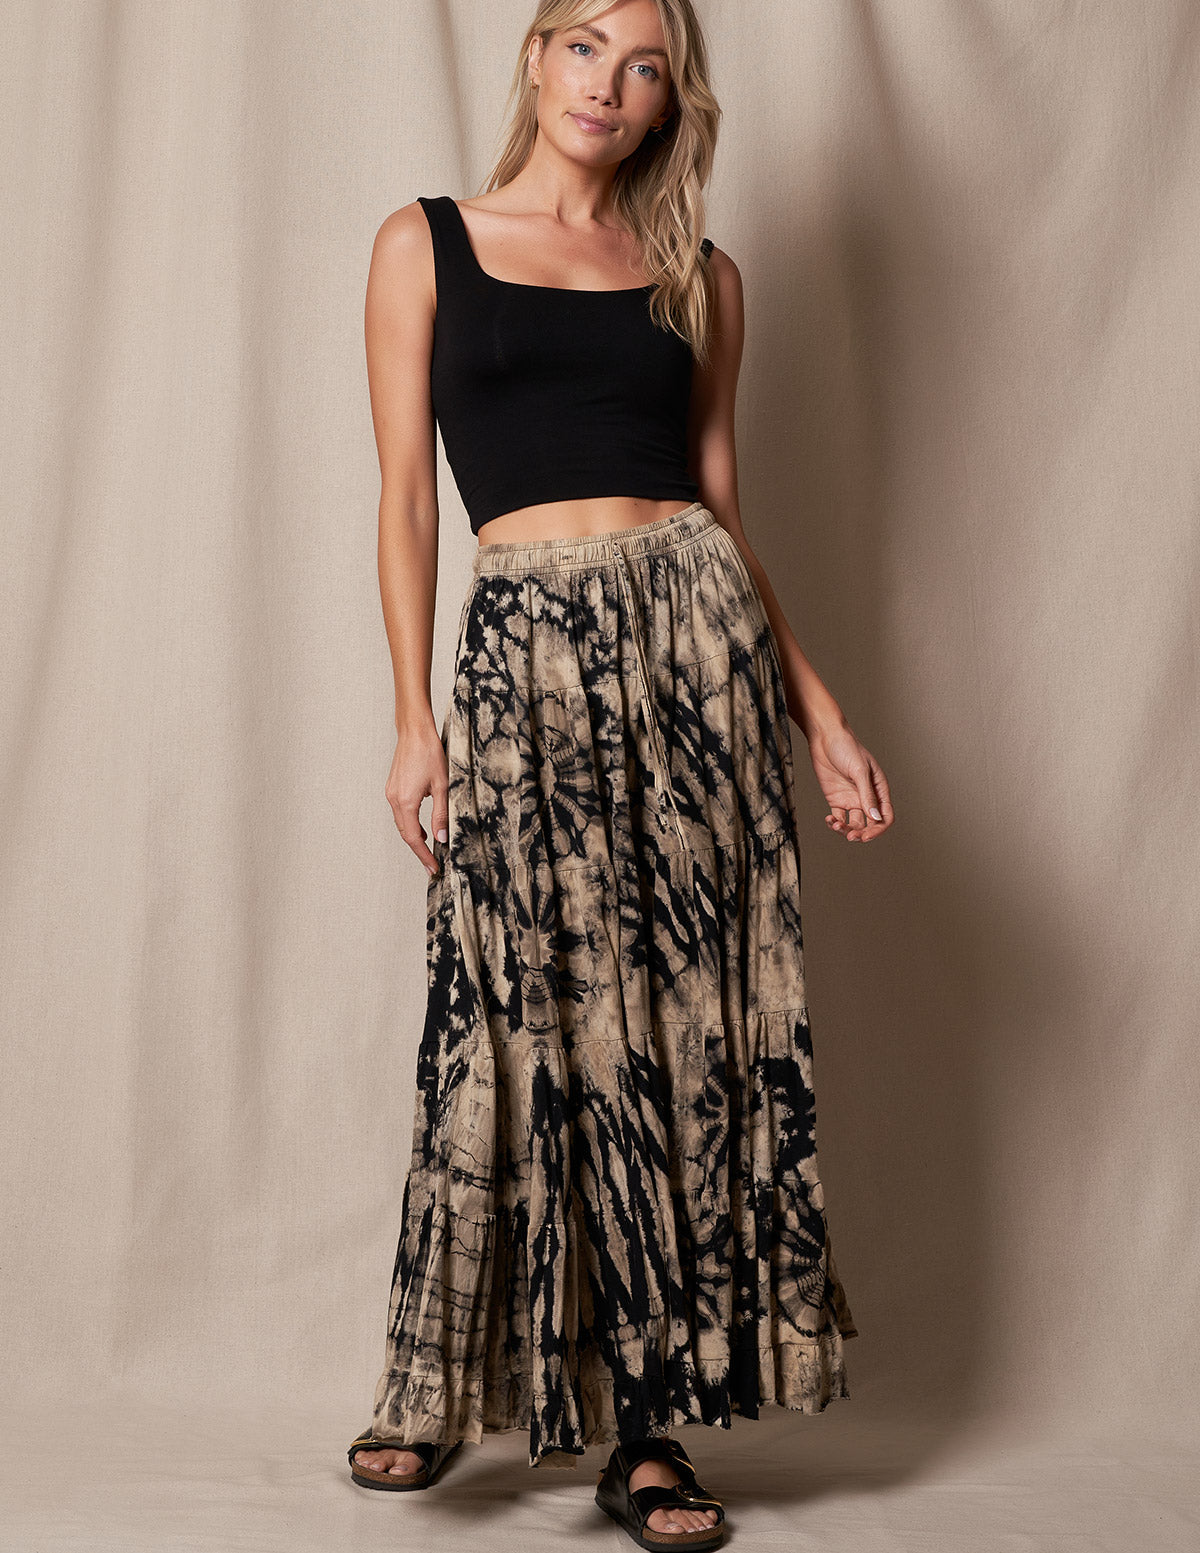 Ted Baker London black polyester blend w/ floral print flare skirt size 1 |  eBay